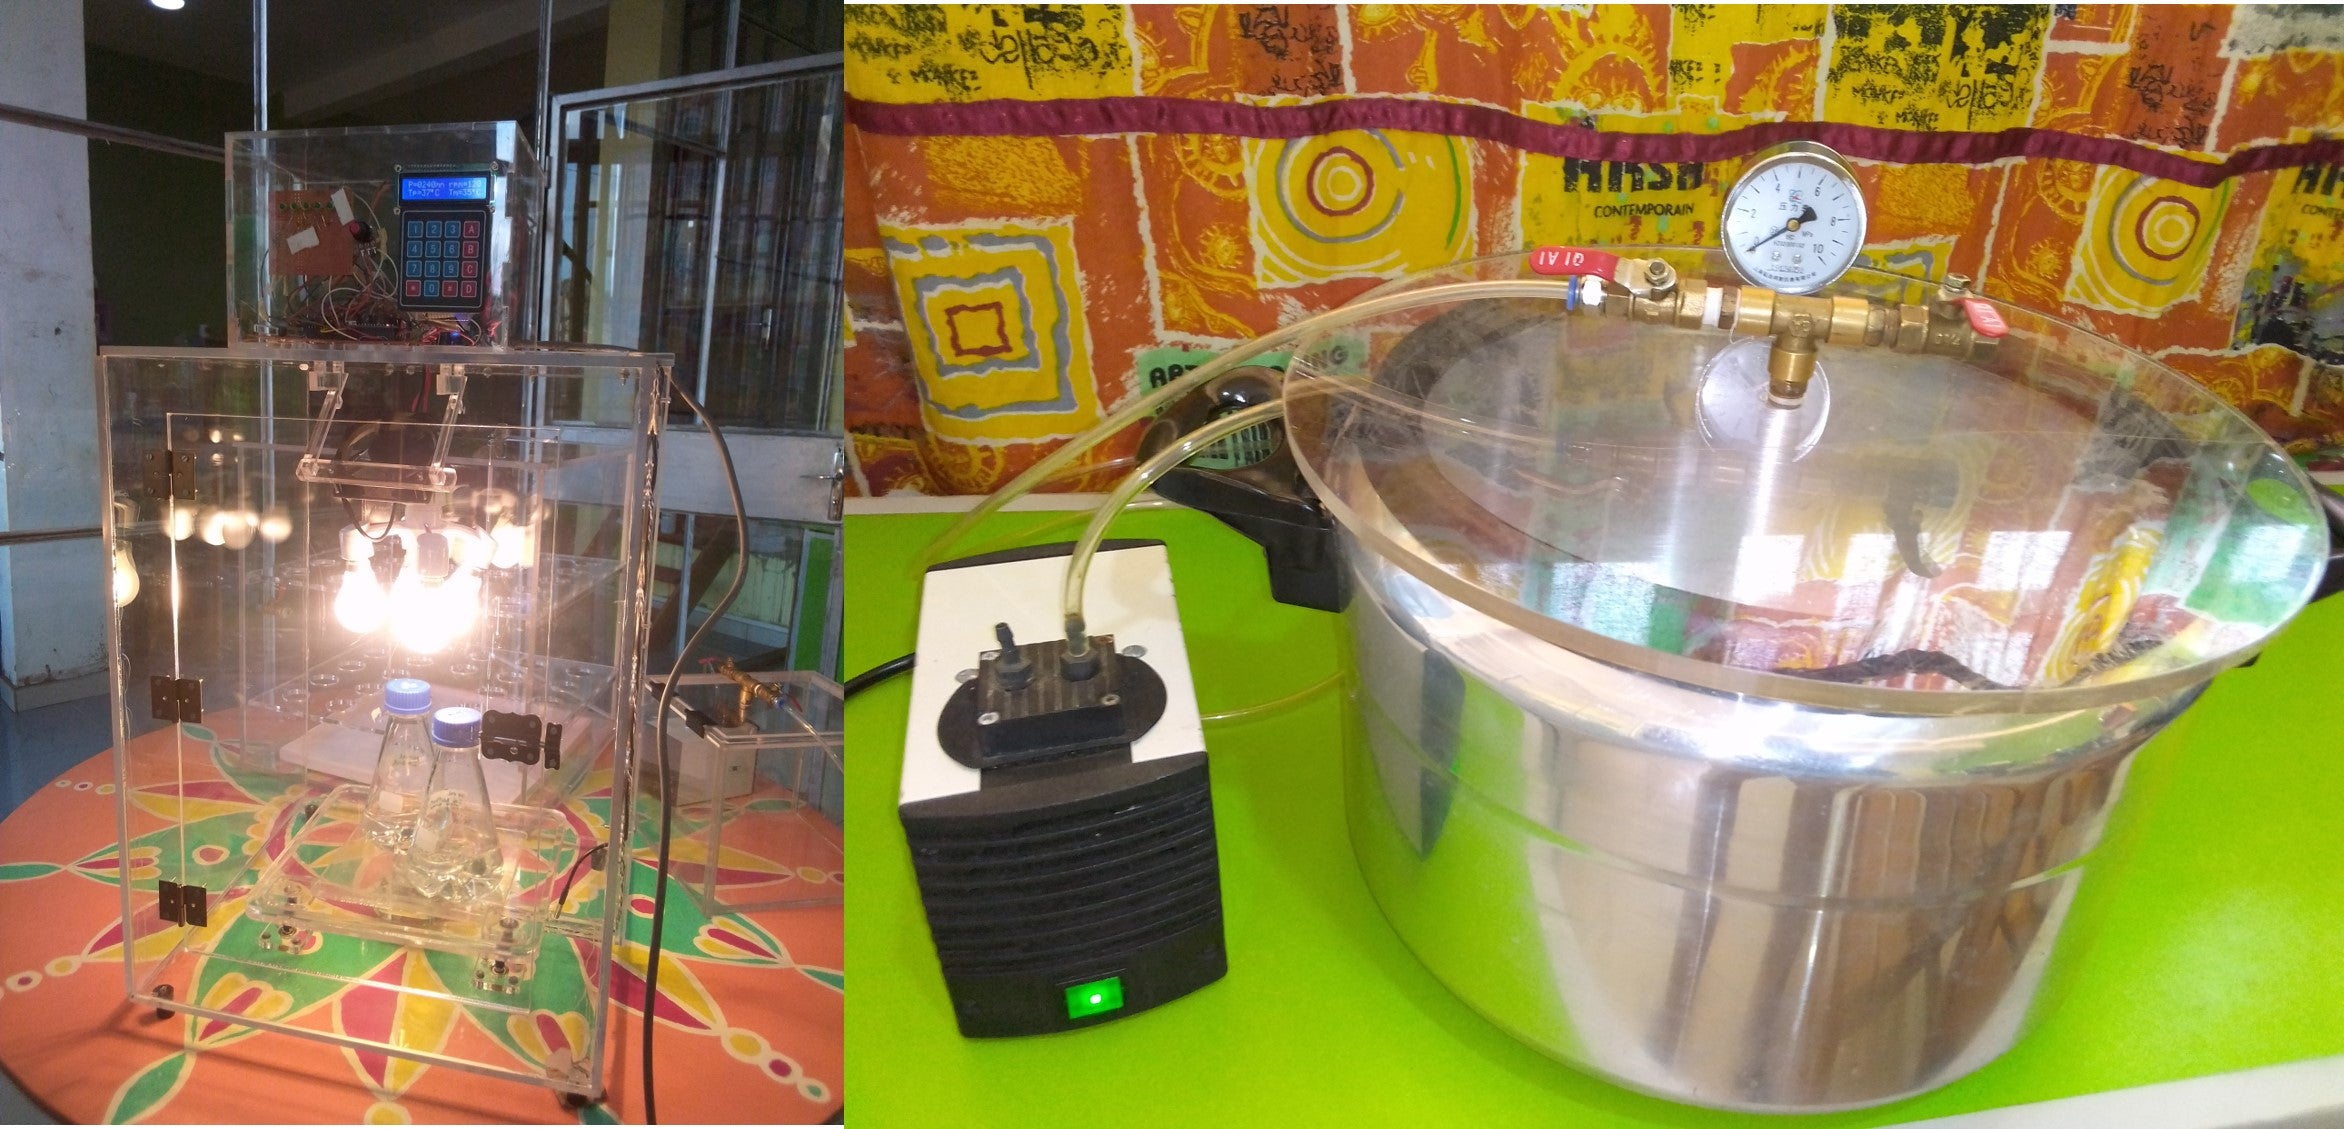 A DIY shaker incubator and vacuum chamber